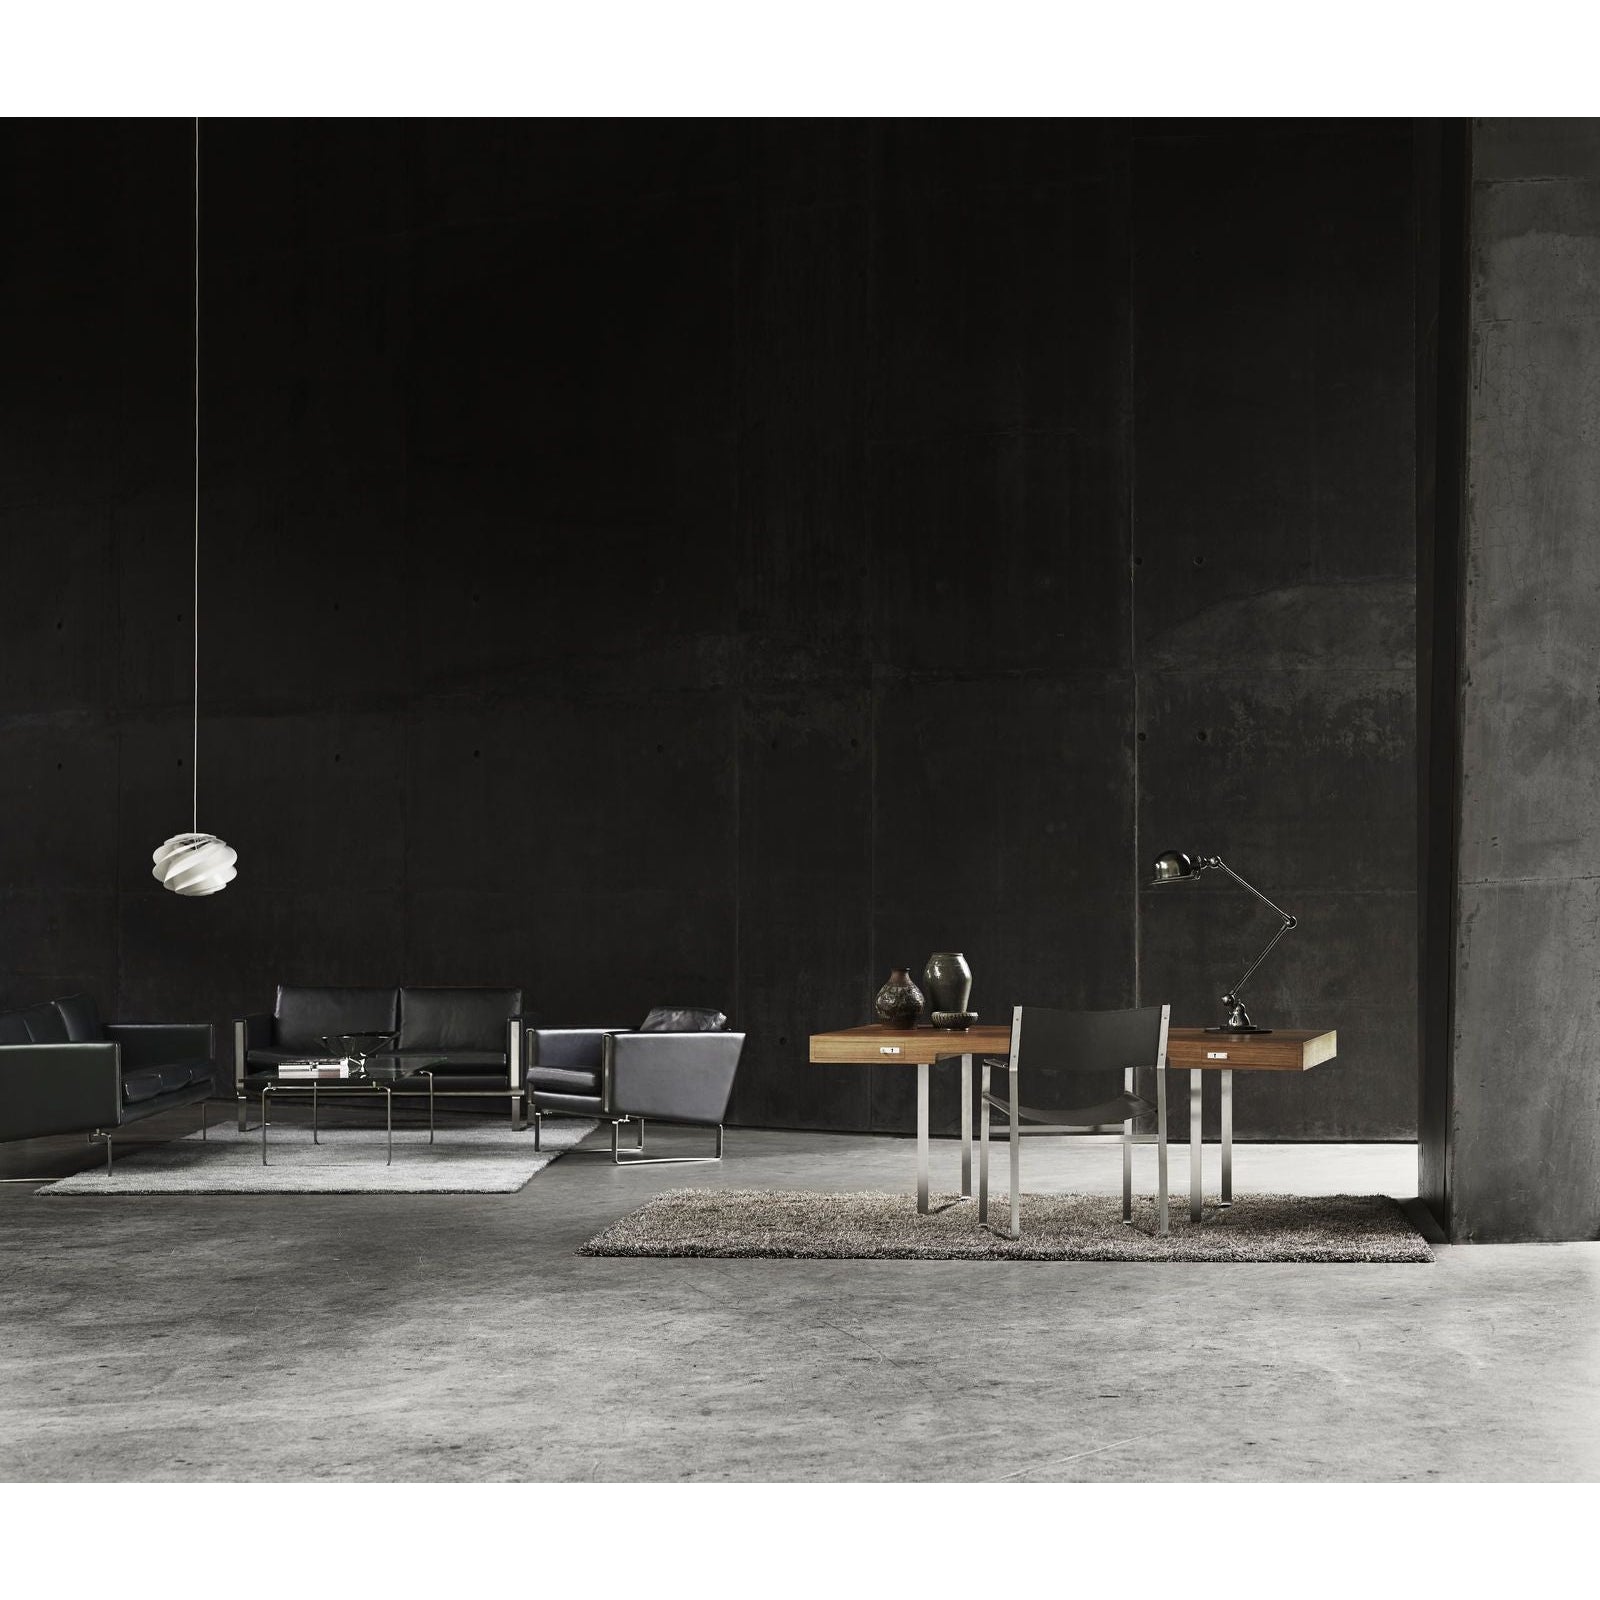 Carl Hansen CH101 Lounge Stol rustfritt stål, svart skinn (Thor 301)